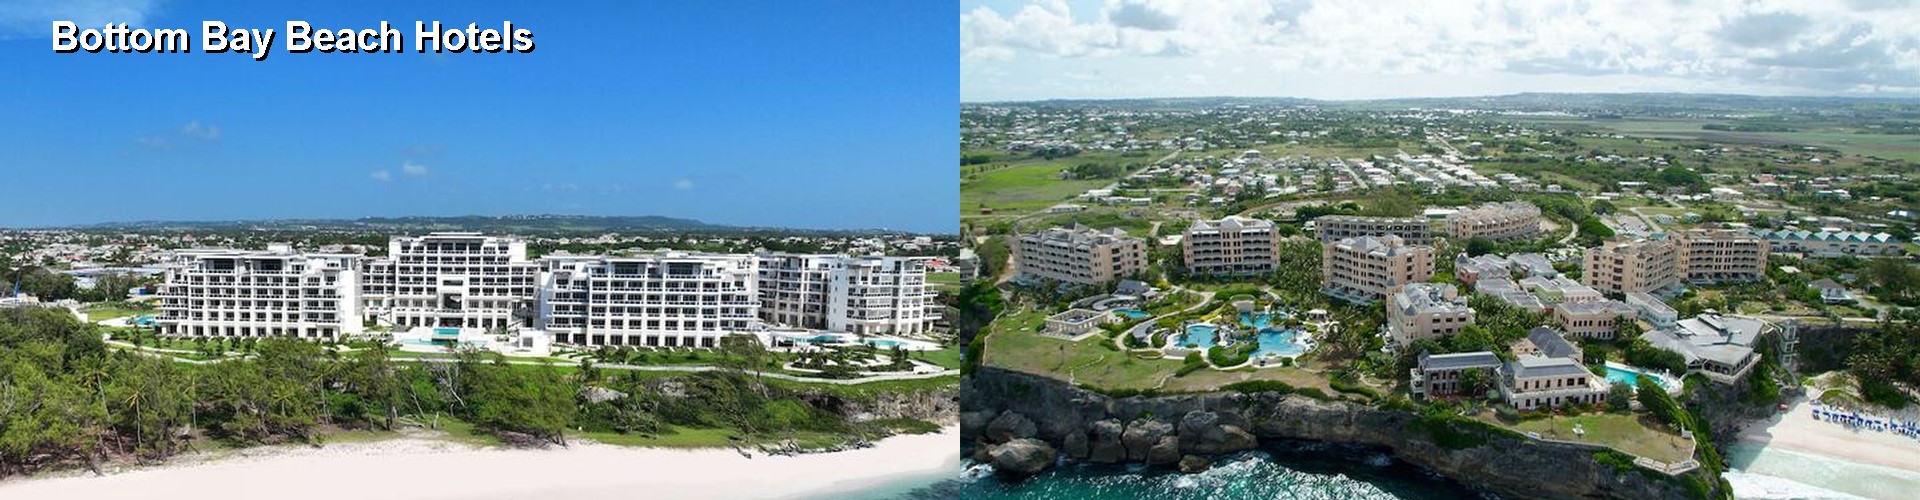 3 Best Hotels near Bottom Bay Beach